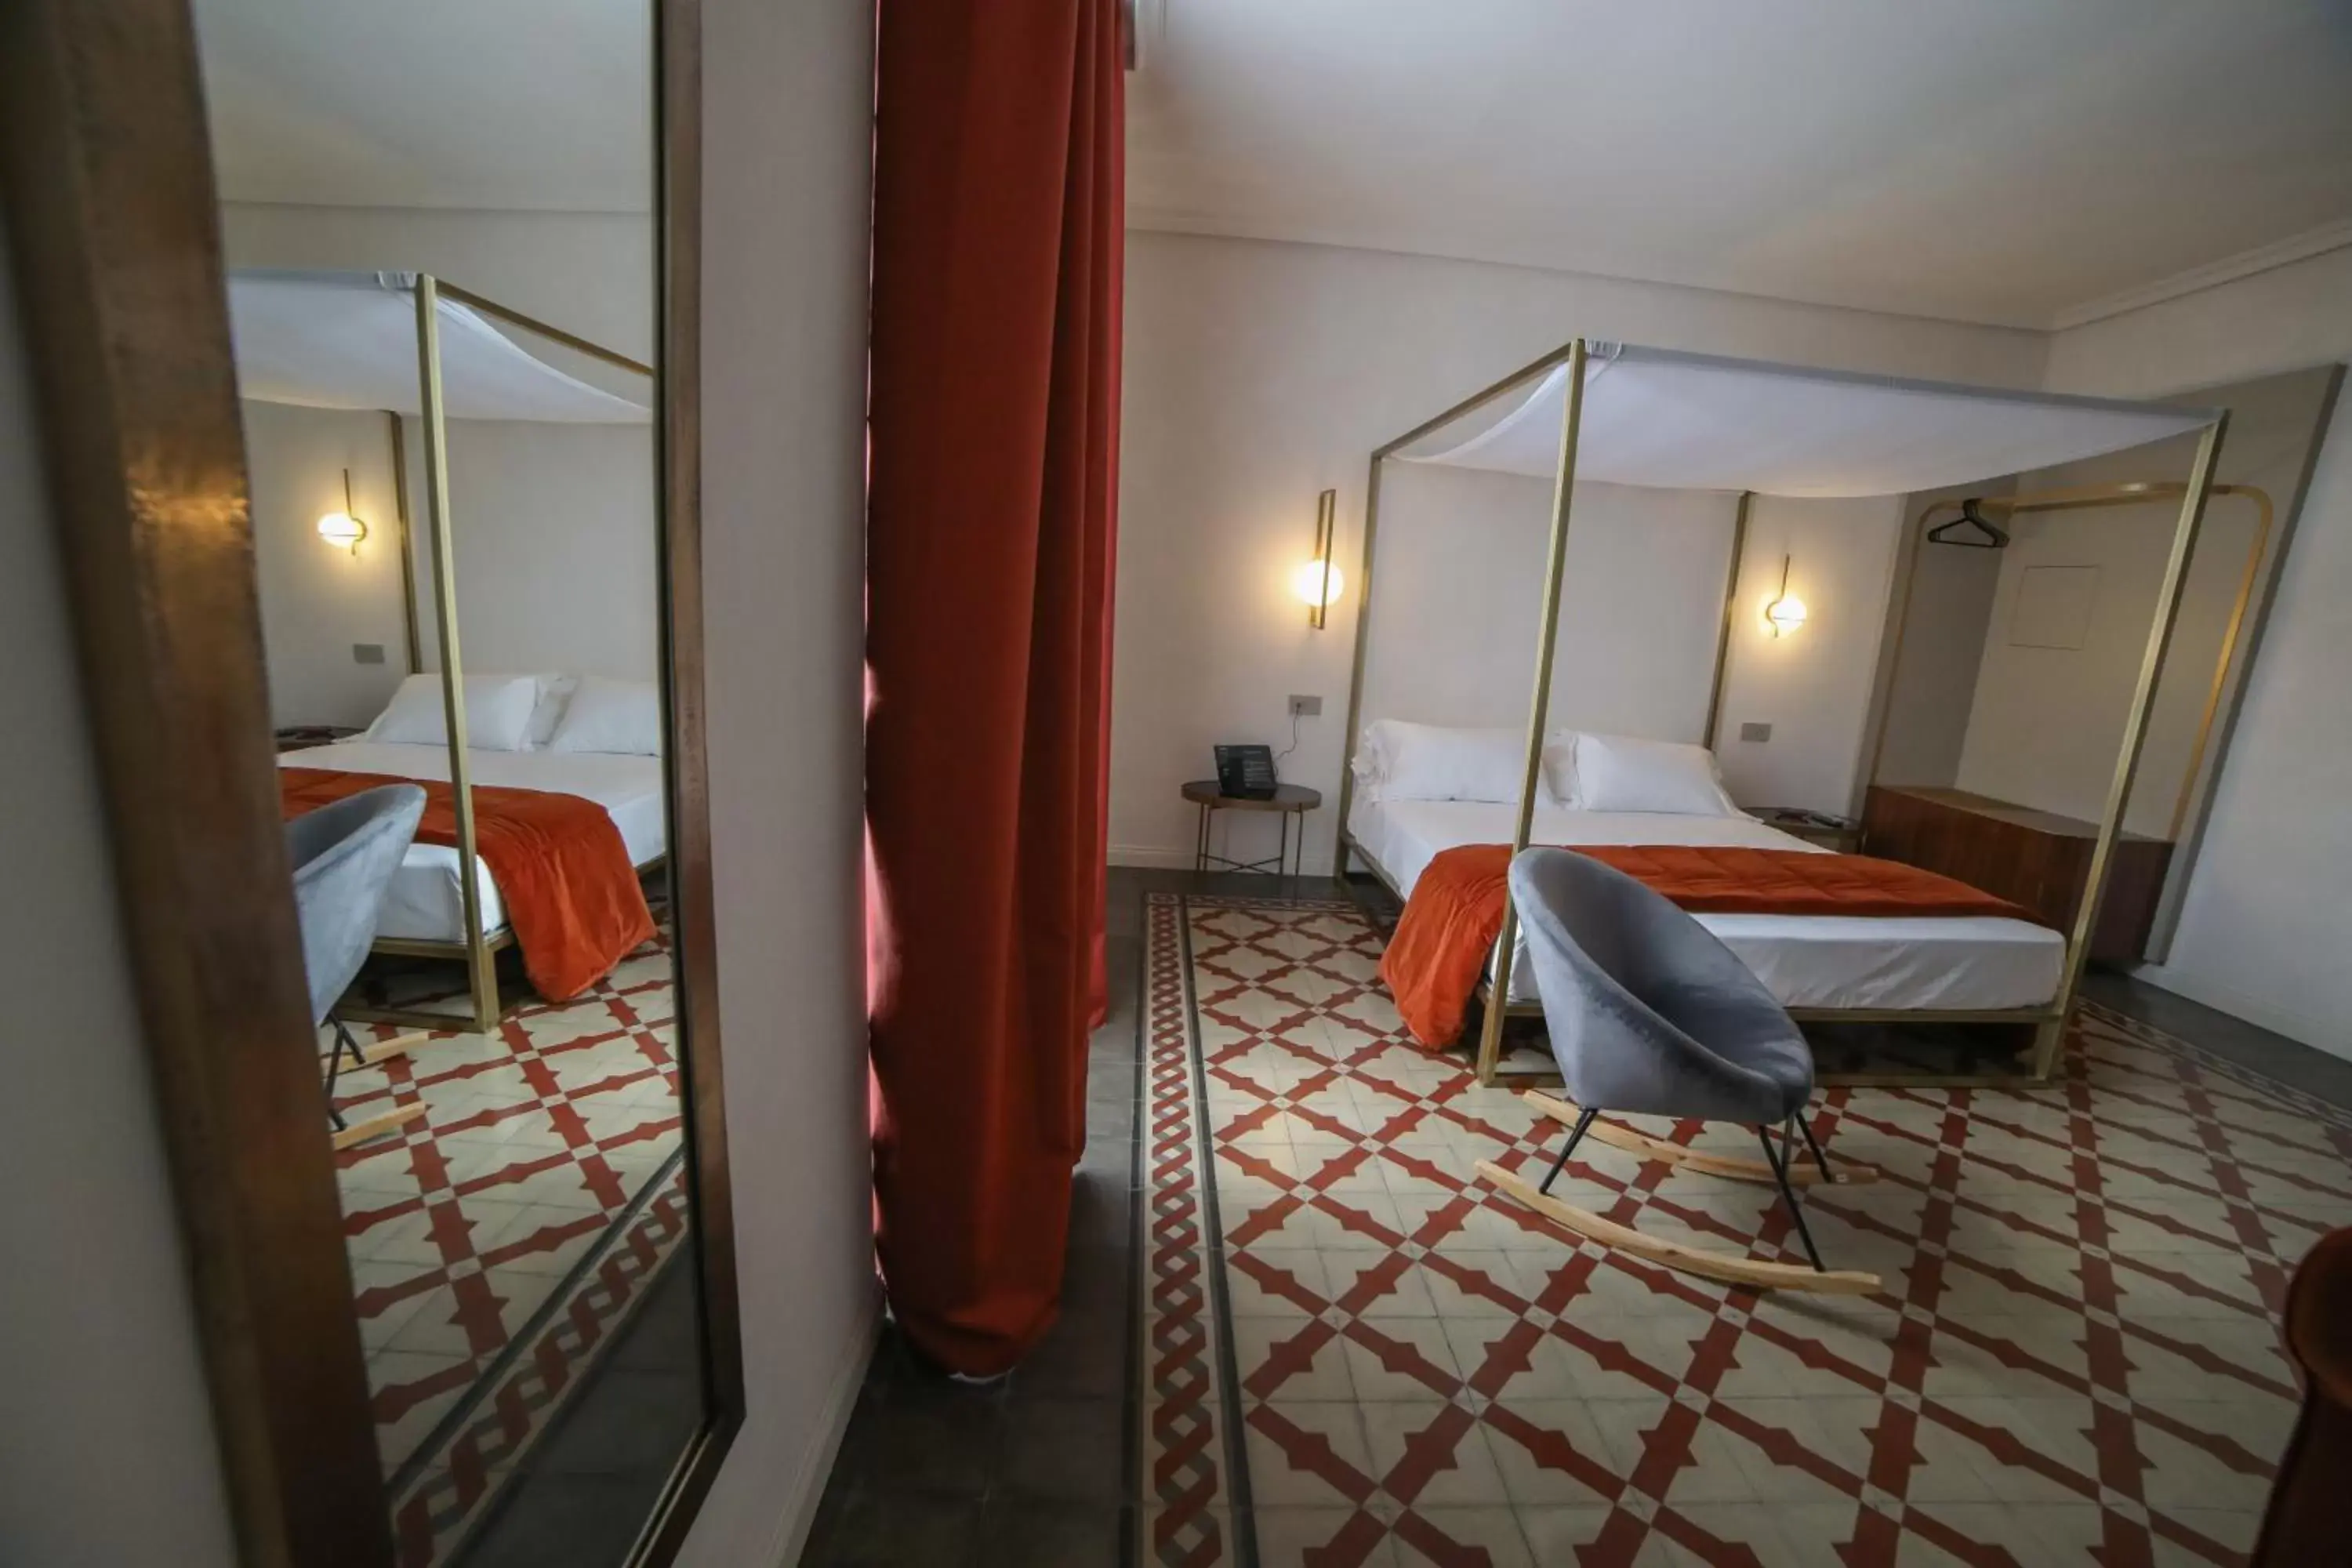 Photo of the whole room, Bathroom in 20 Miglia Boutique Hotel